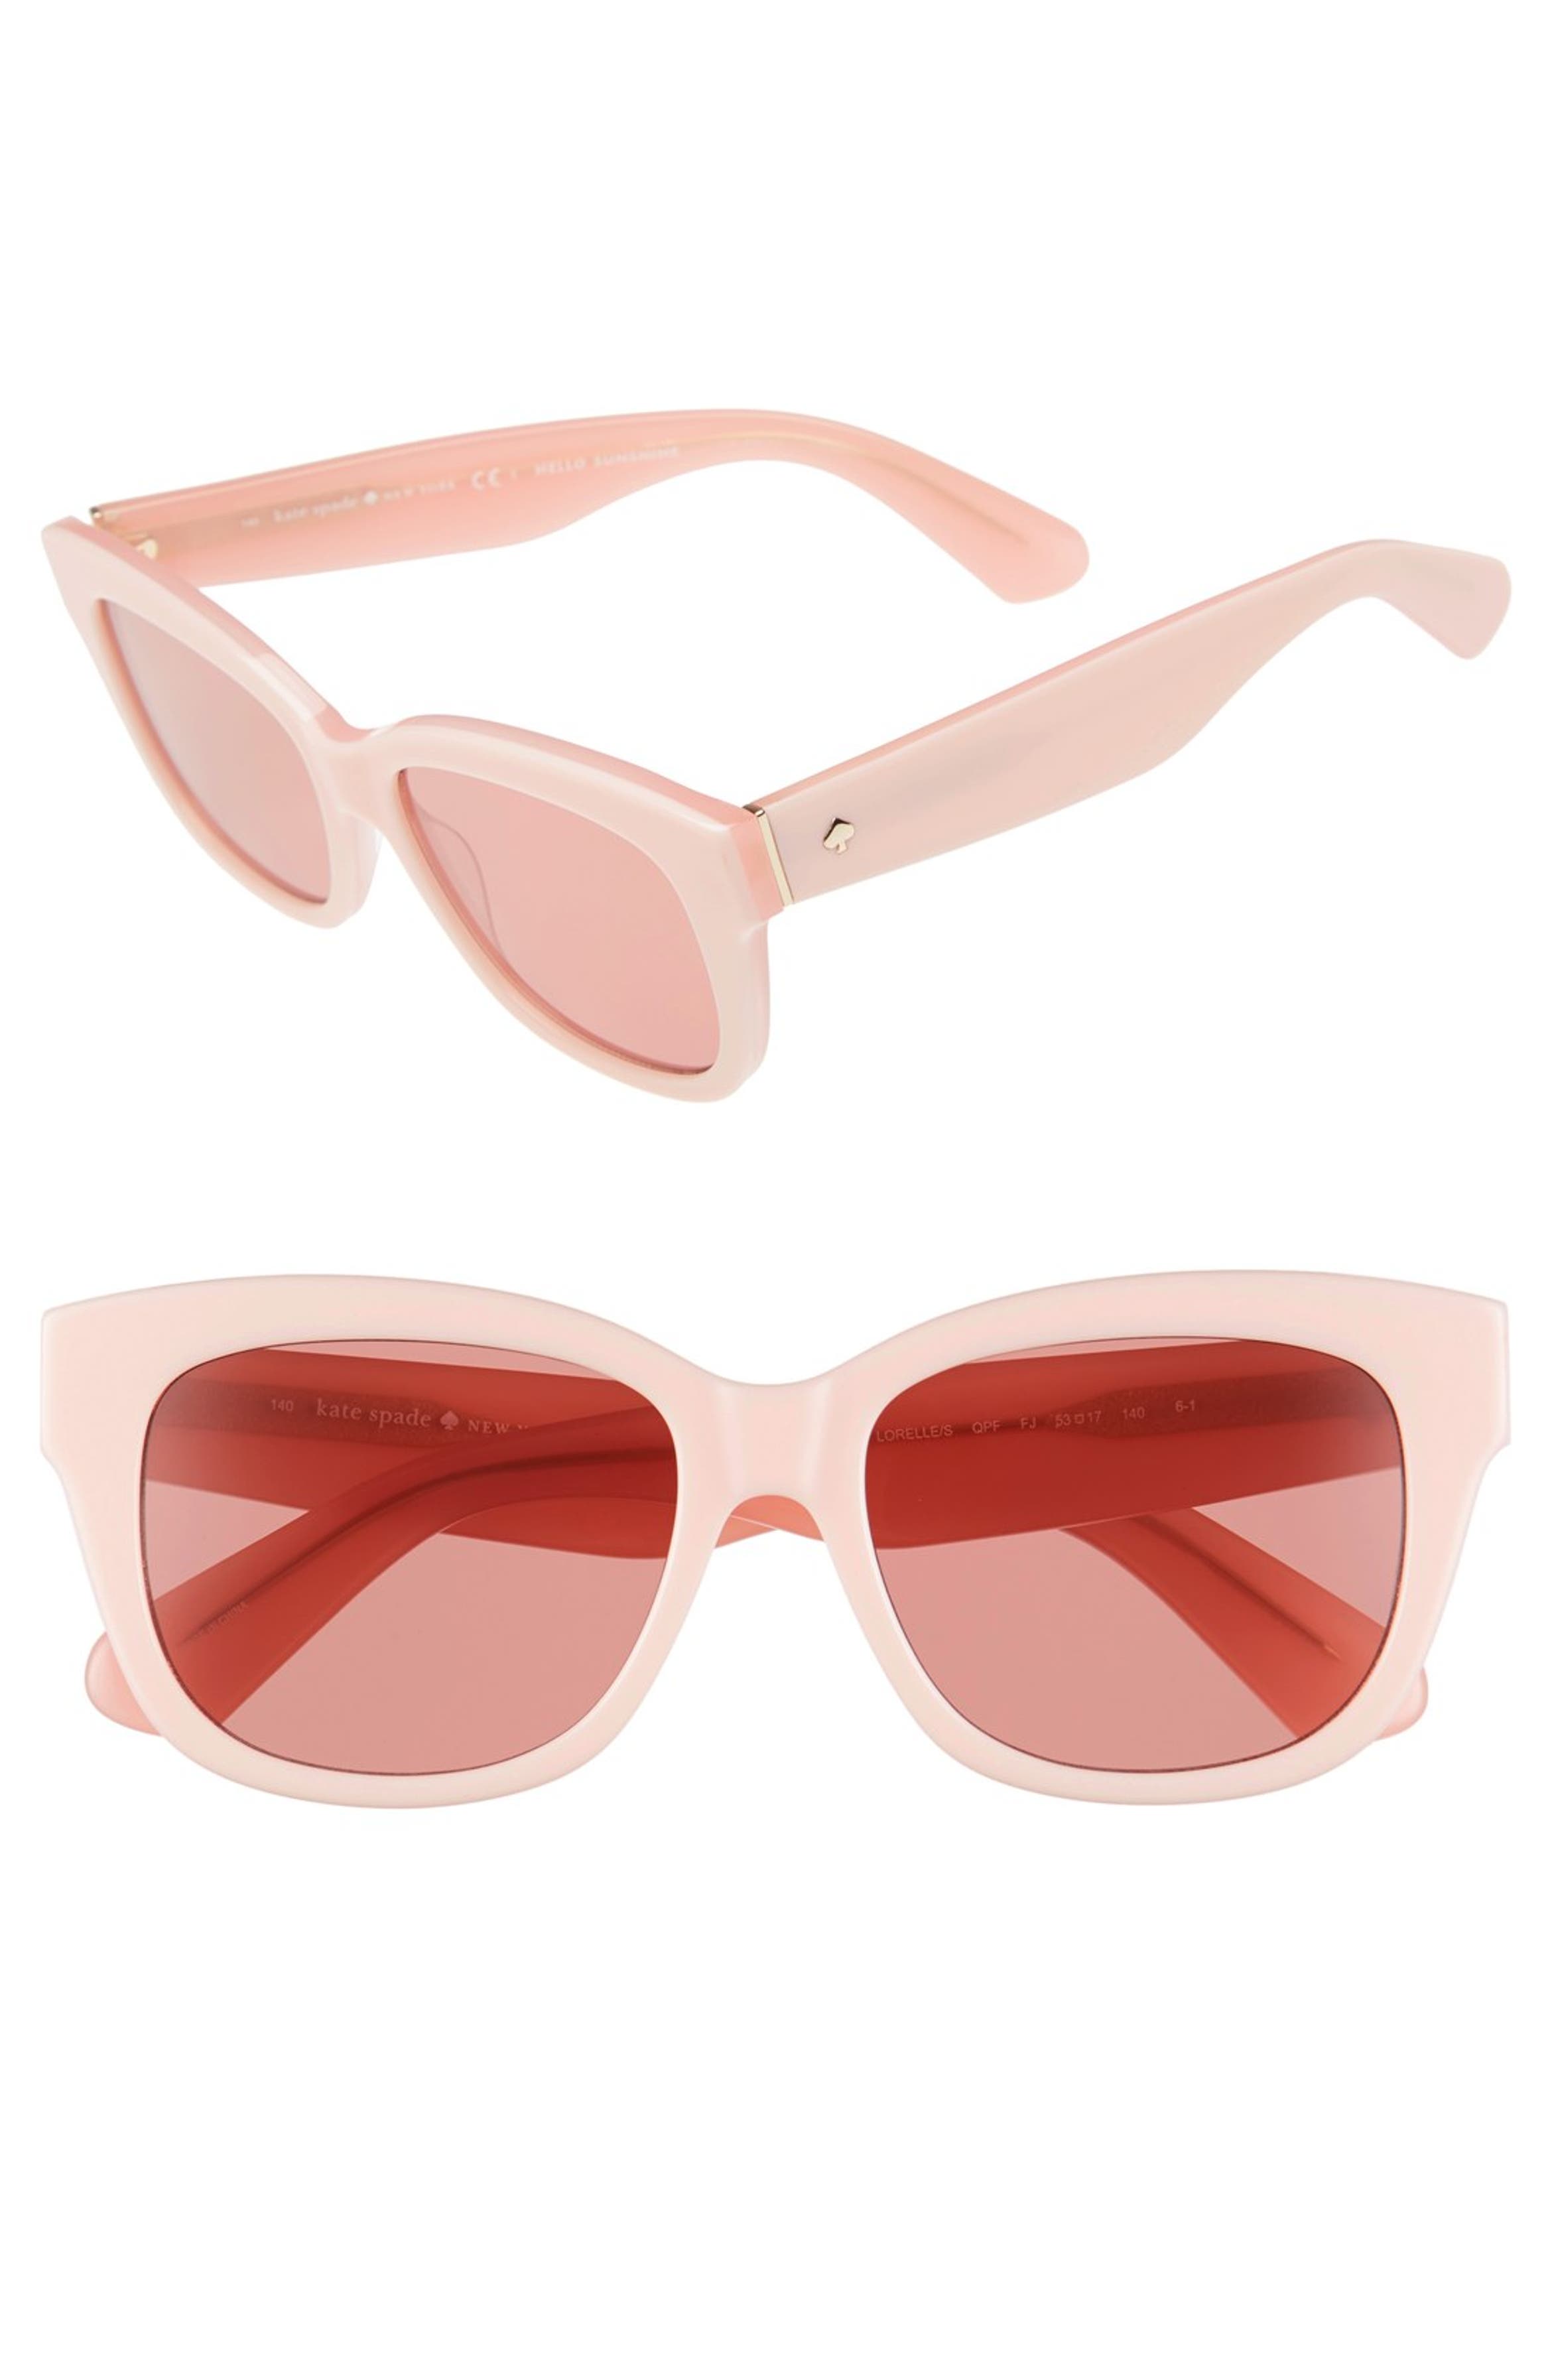 Kate Spade New York Lorelle 53mm Cat Eye Sunglasses Nordstrom